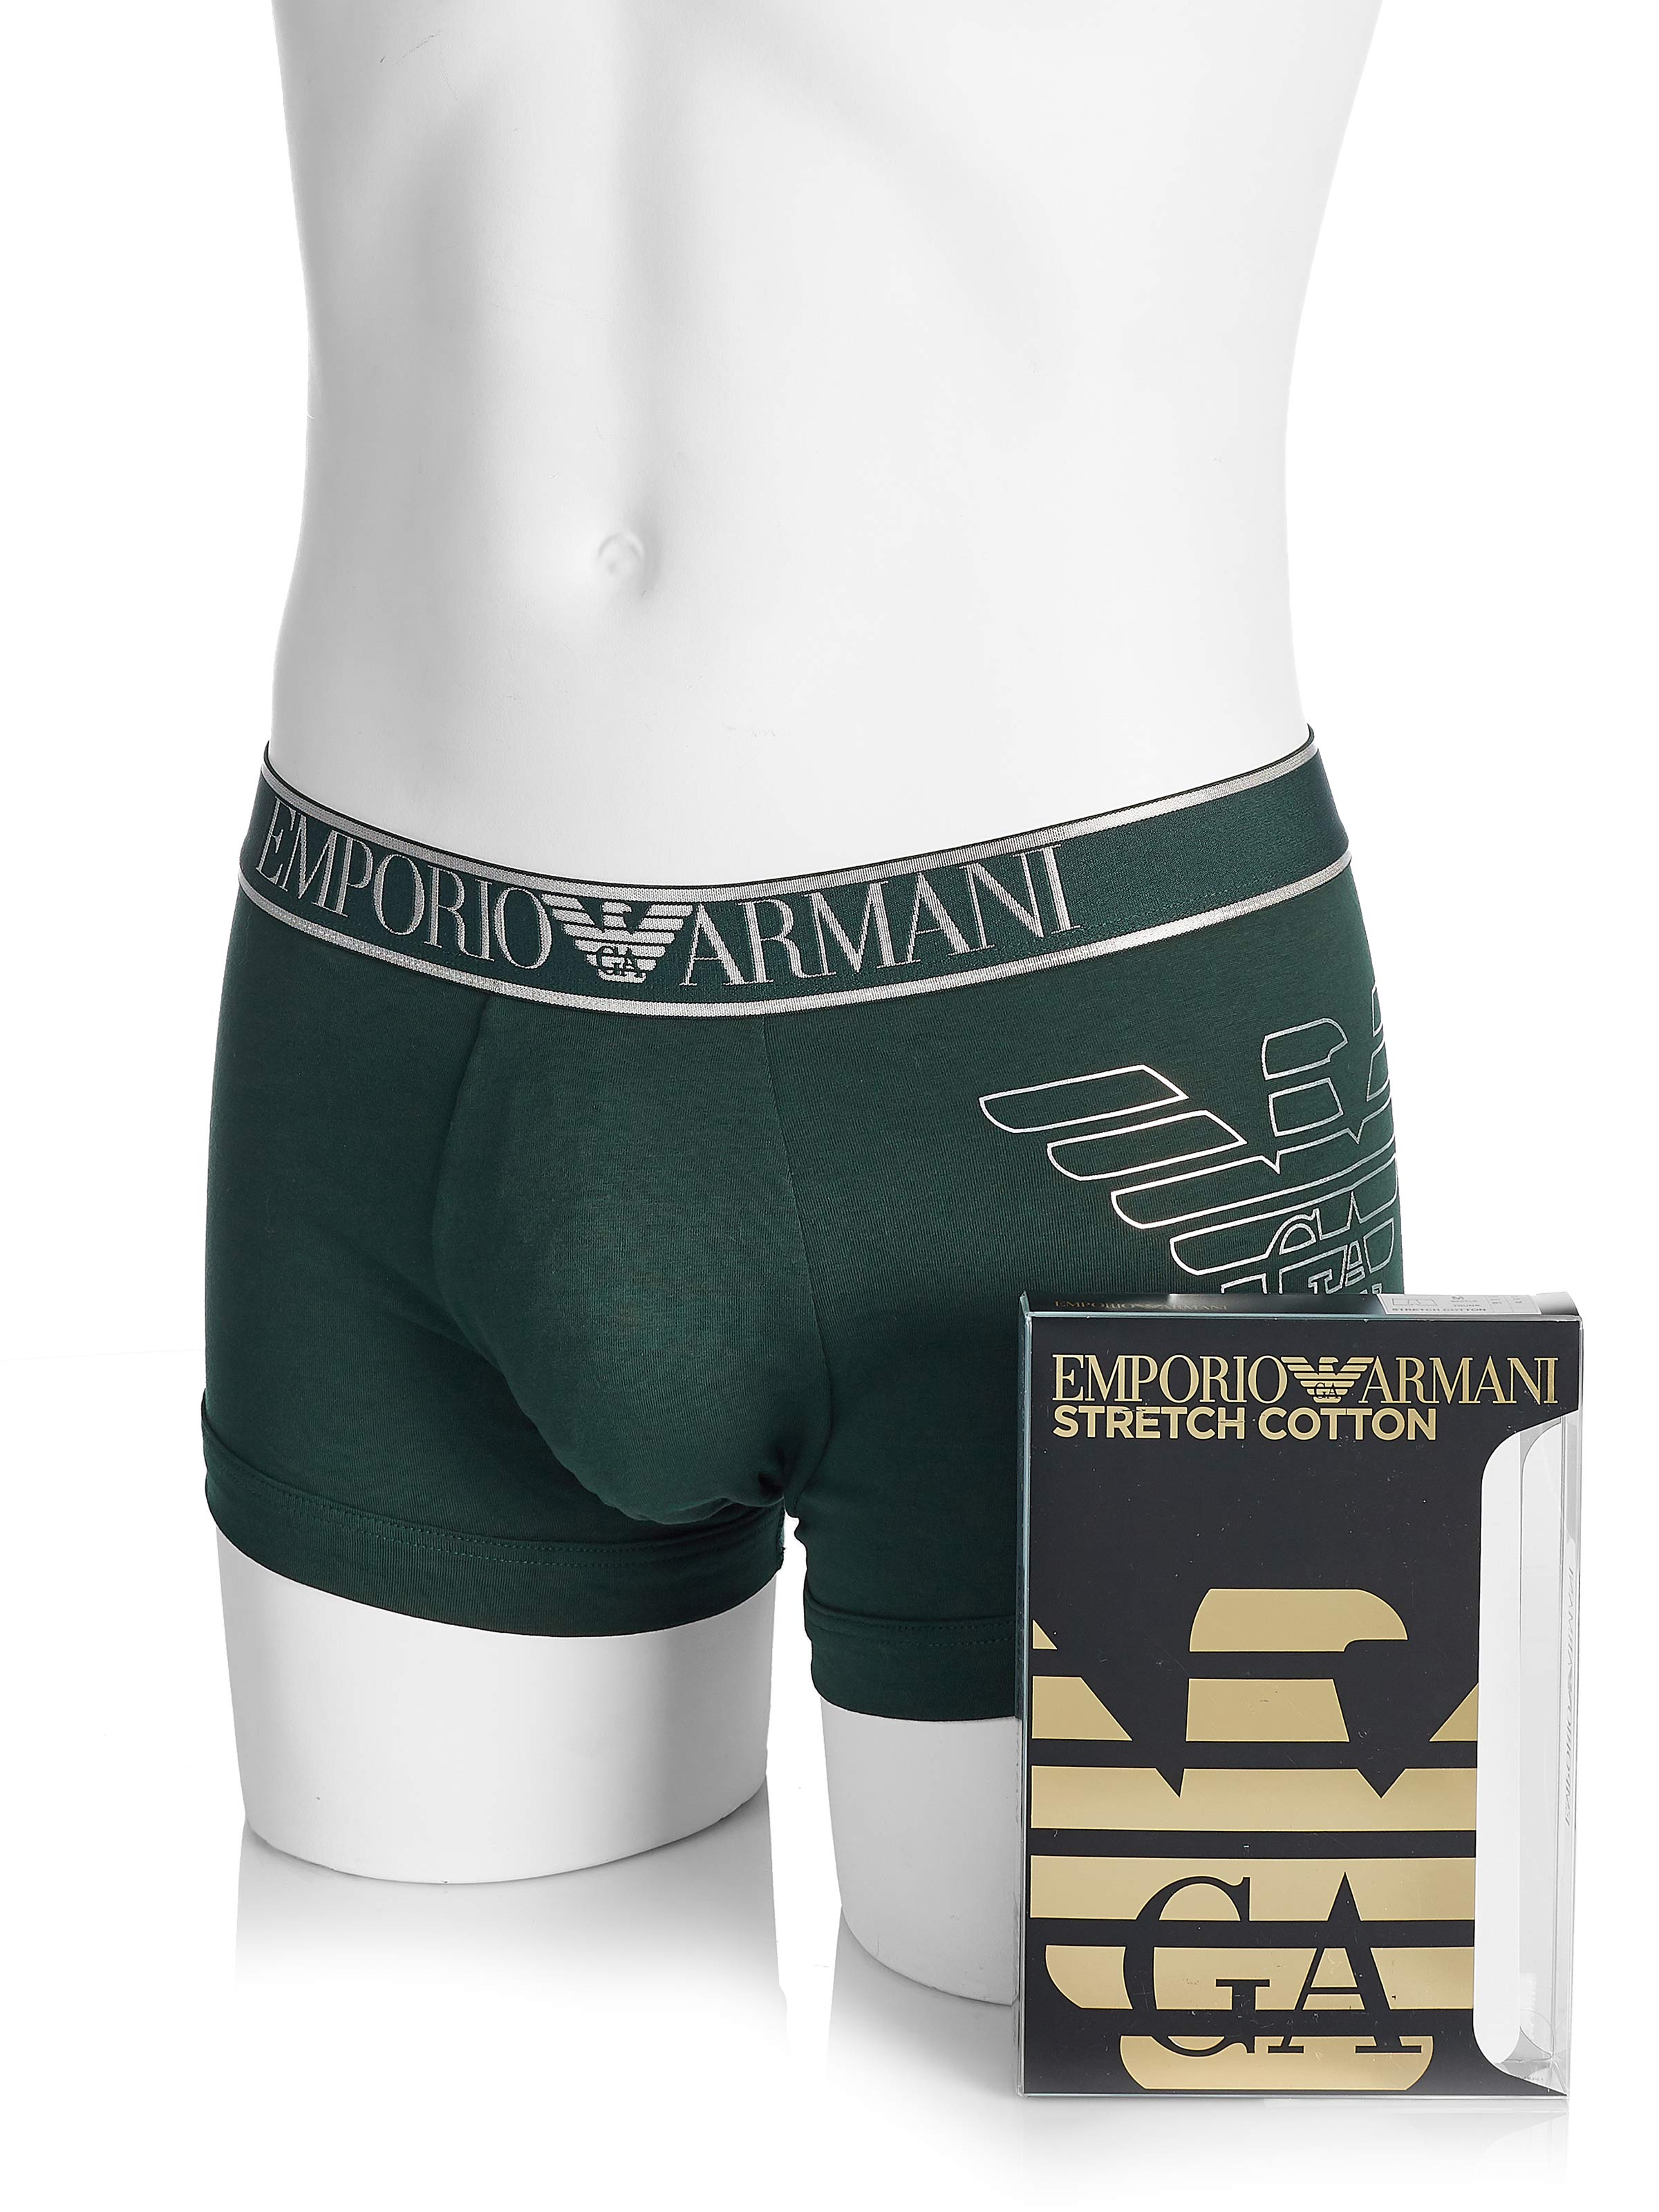 Emporio Armani Underwear Green on SALE |